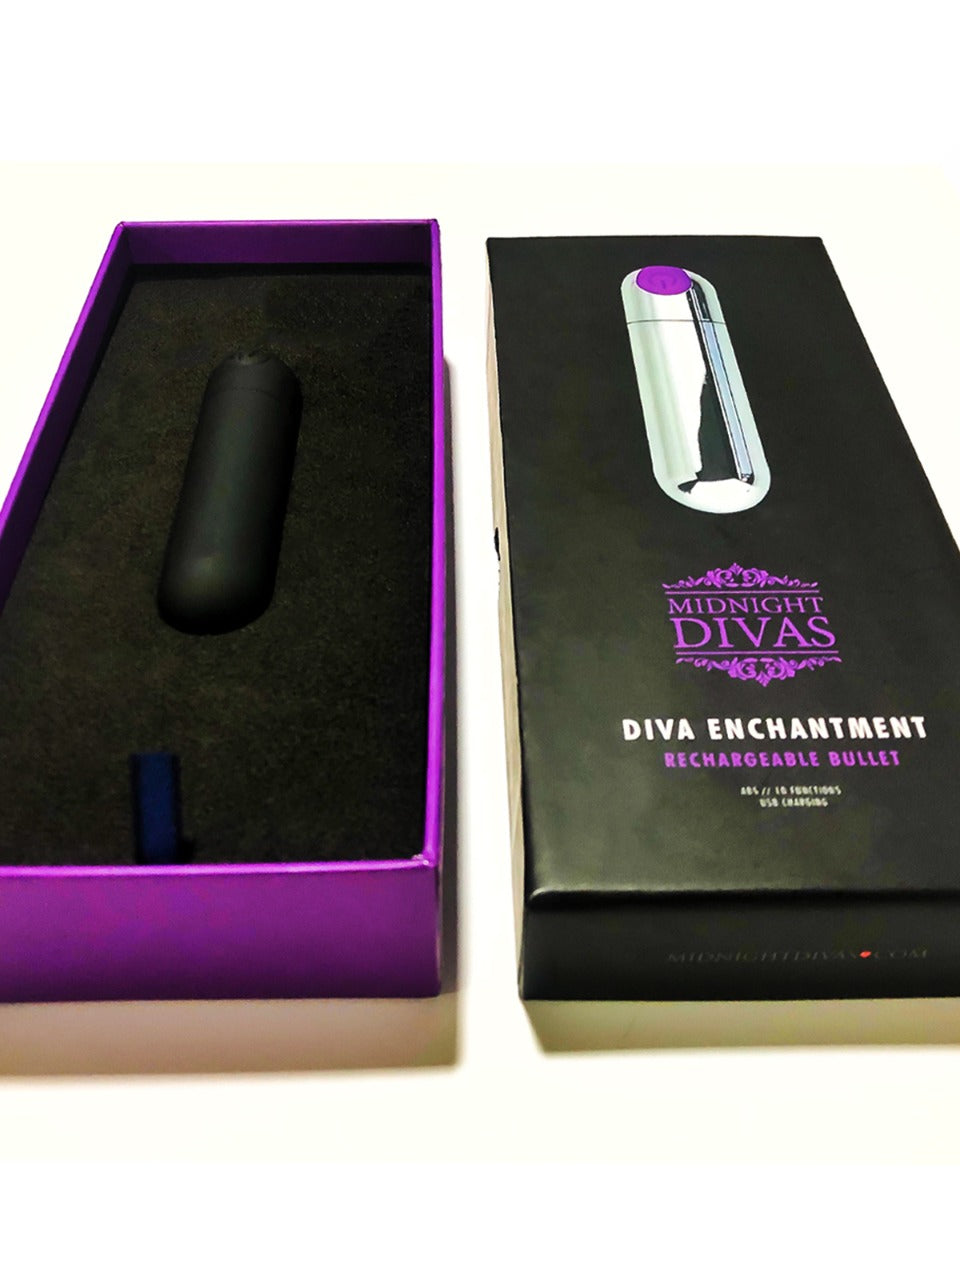 The Diva Enchantment